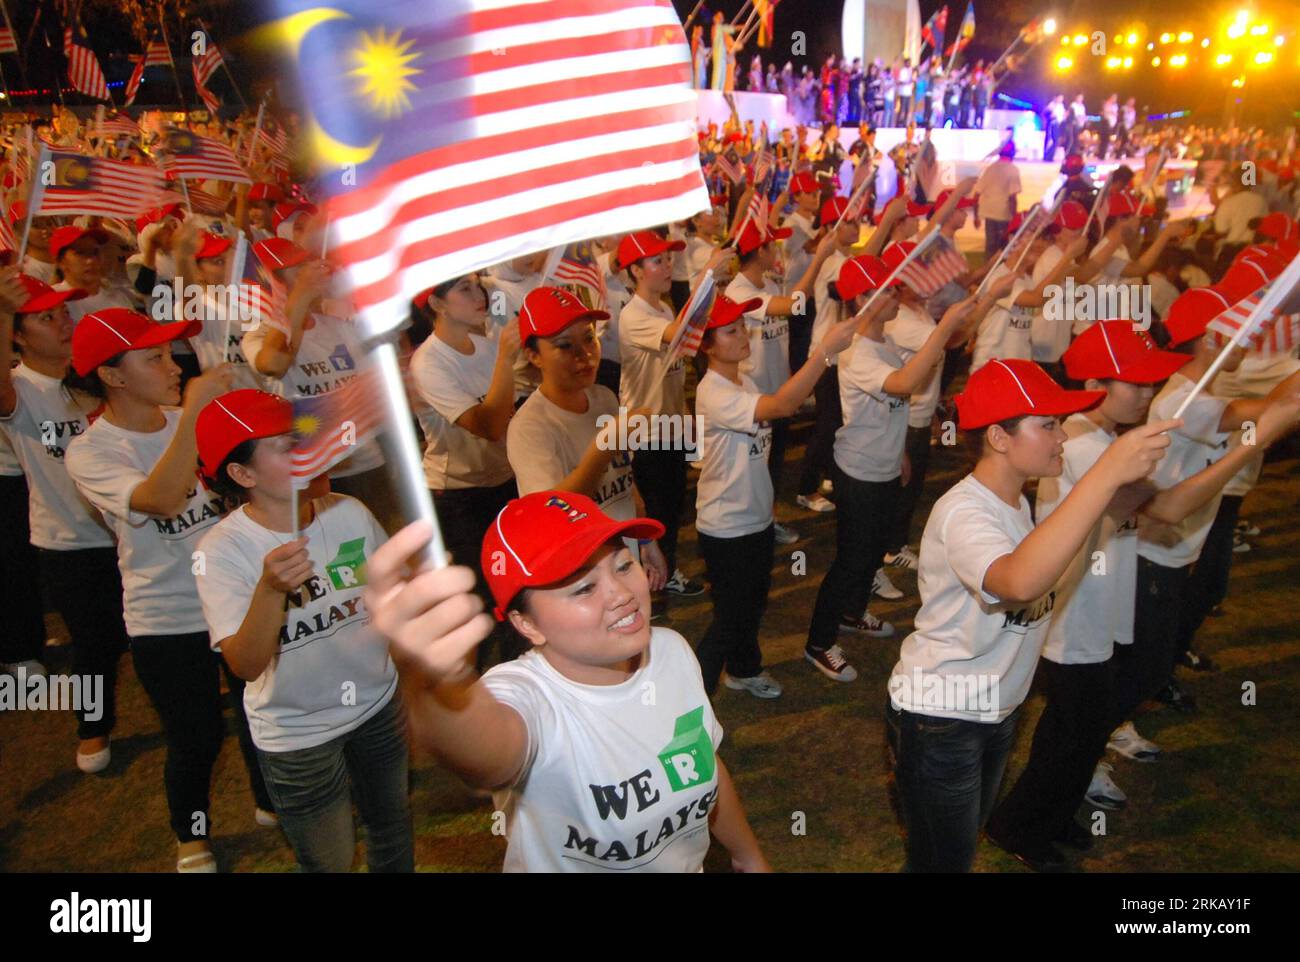 Bildnummer: 54436568  Datum: 16.09.2010  Copyright: imago/Xinhua (100917) -- KOTA KINABALU, Sept. 17, 2010 (Xinhua) -- Revelers wave Malaysia s national flag during a ceremony marking the 47th anniversary of the founding of Malaysia, in Kota Kinabalu, capital of Sabah state, Sept. 16, 2010. (Xinhua) (dyw) MALAYSIA-SABAH-47TH ANNIVERSARY PUBLICATIONxNOTxINxCHN Gesellschaft Politik Gründung Jahrestag premiumd xint kbdig xsk 2010 quer o0 Fahne, Nationalfahne    Bildnummer 54436568 Date 16 09 2010 Copyright Imago XINHUA  Kota Kinabalu Sept 17 2010 XINHUA Revels Wave Malaysia S National Flag during Stock Photo